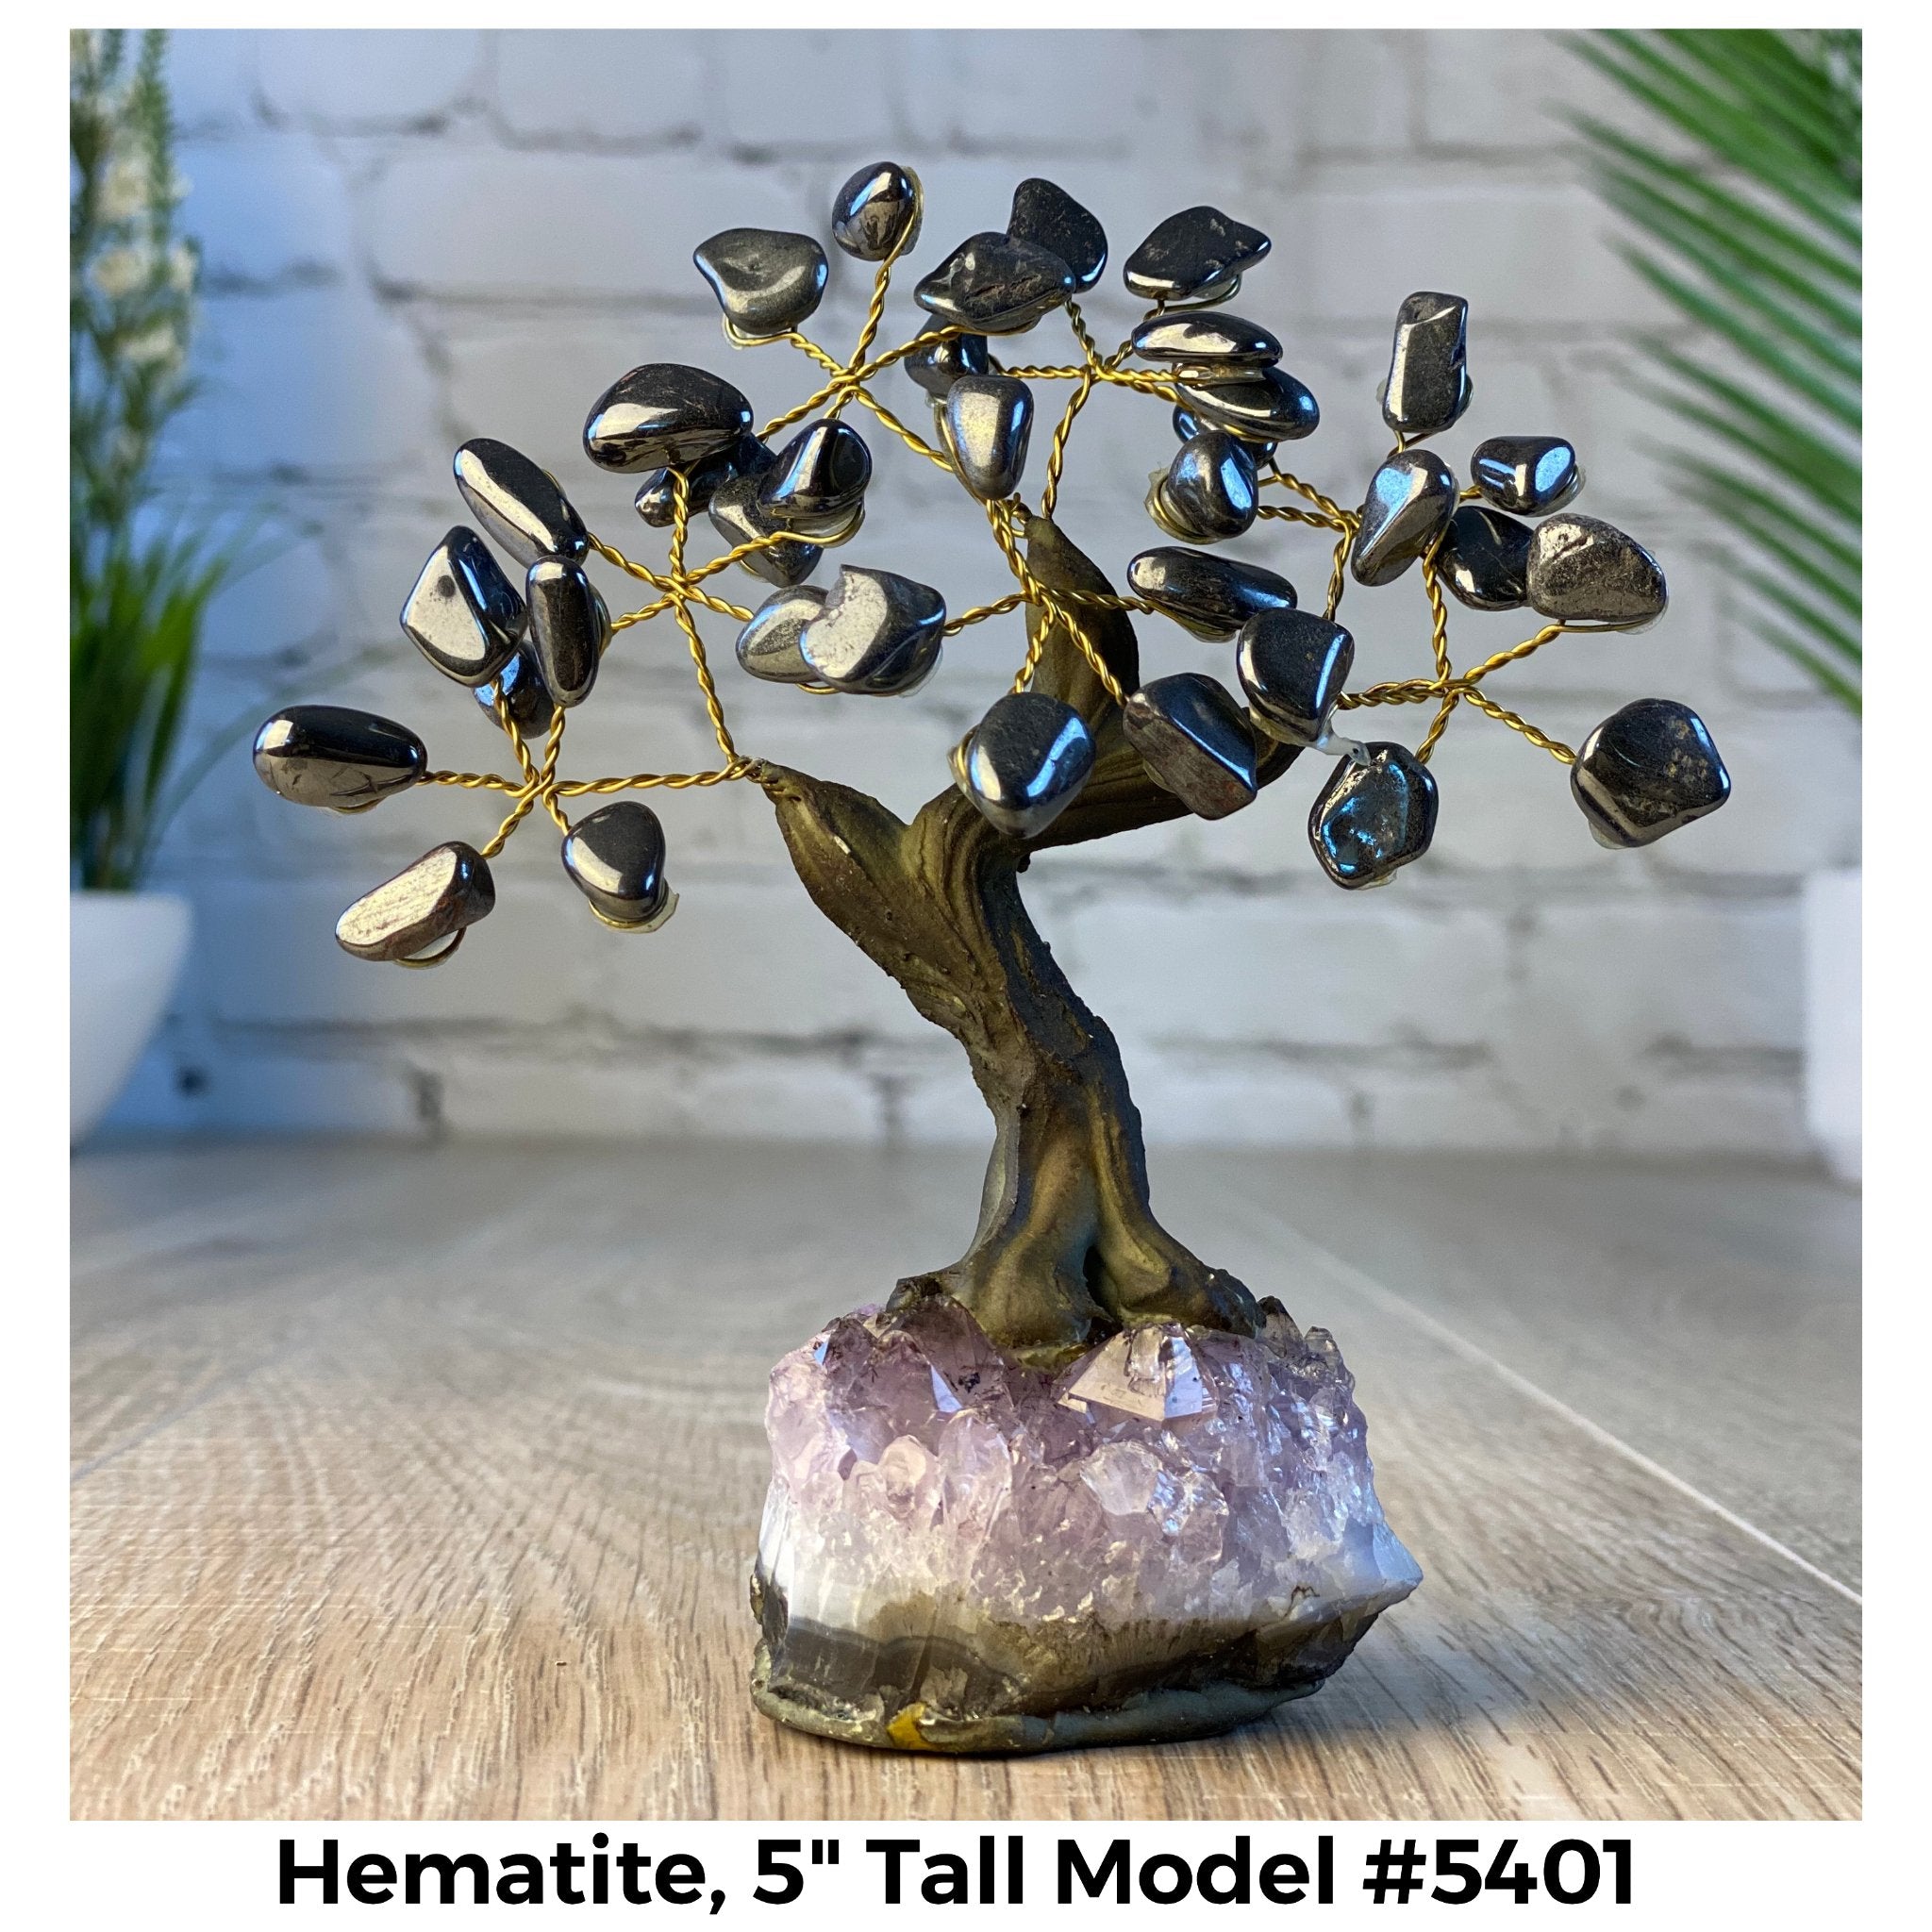 Hematite 5" Tall Handmade Gemstone Tree on a Crystal base, 35 Gems #5401HEMA - Brazil GemsBrazil GemsHematite 5" Tall Handmade Gemstone Tree on a Crystal base, 35 Gems #5401HEMAGemstone Trees5401HEMA